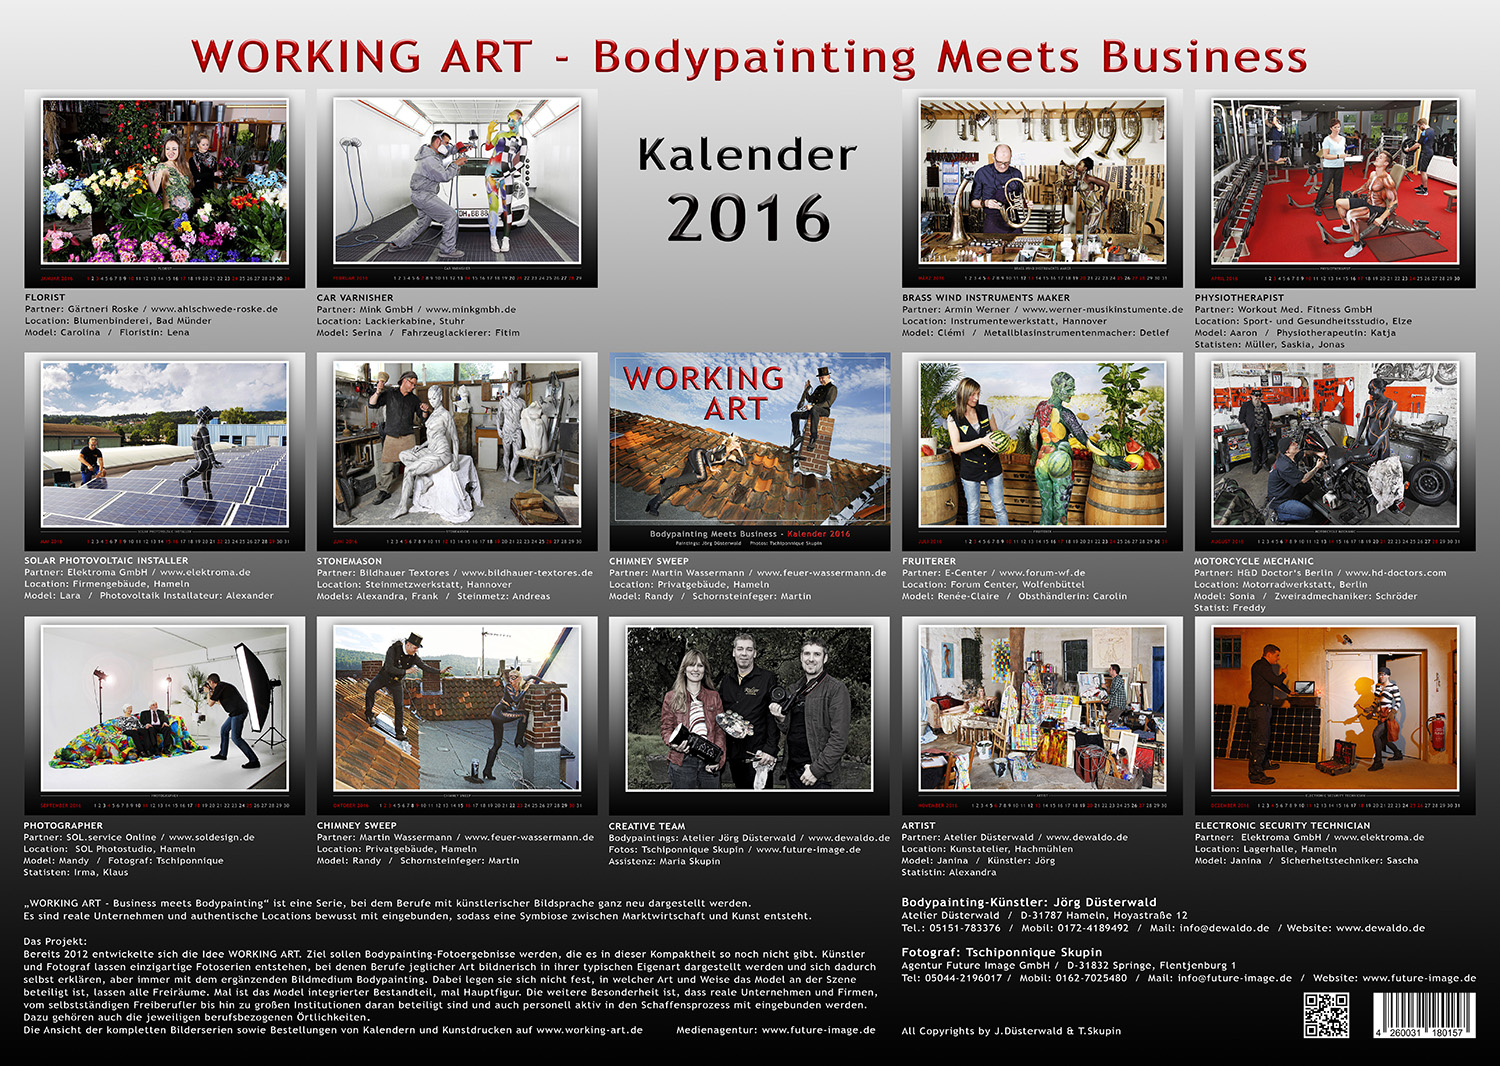 Kalender 2016: Working Art - Bodypainting Meets Business